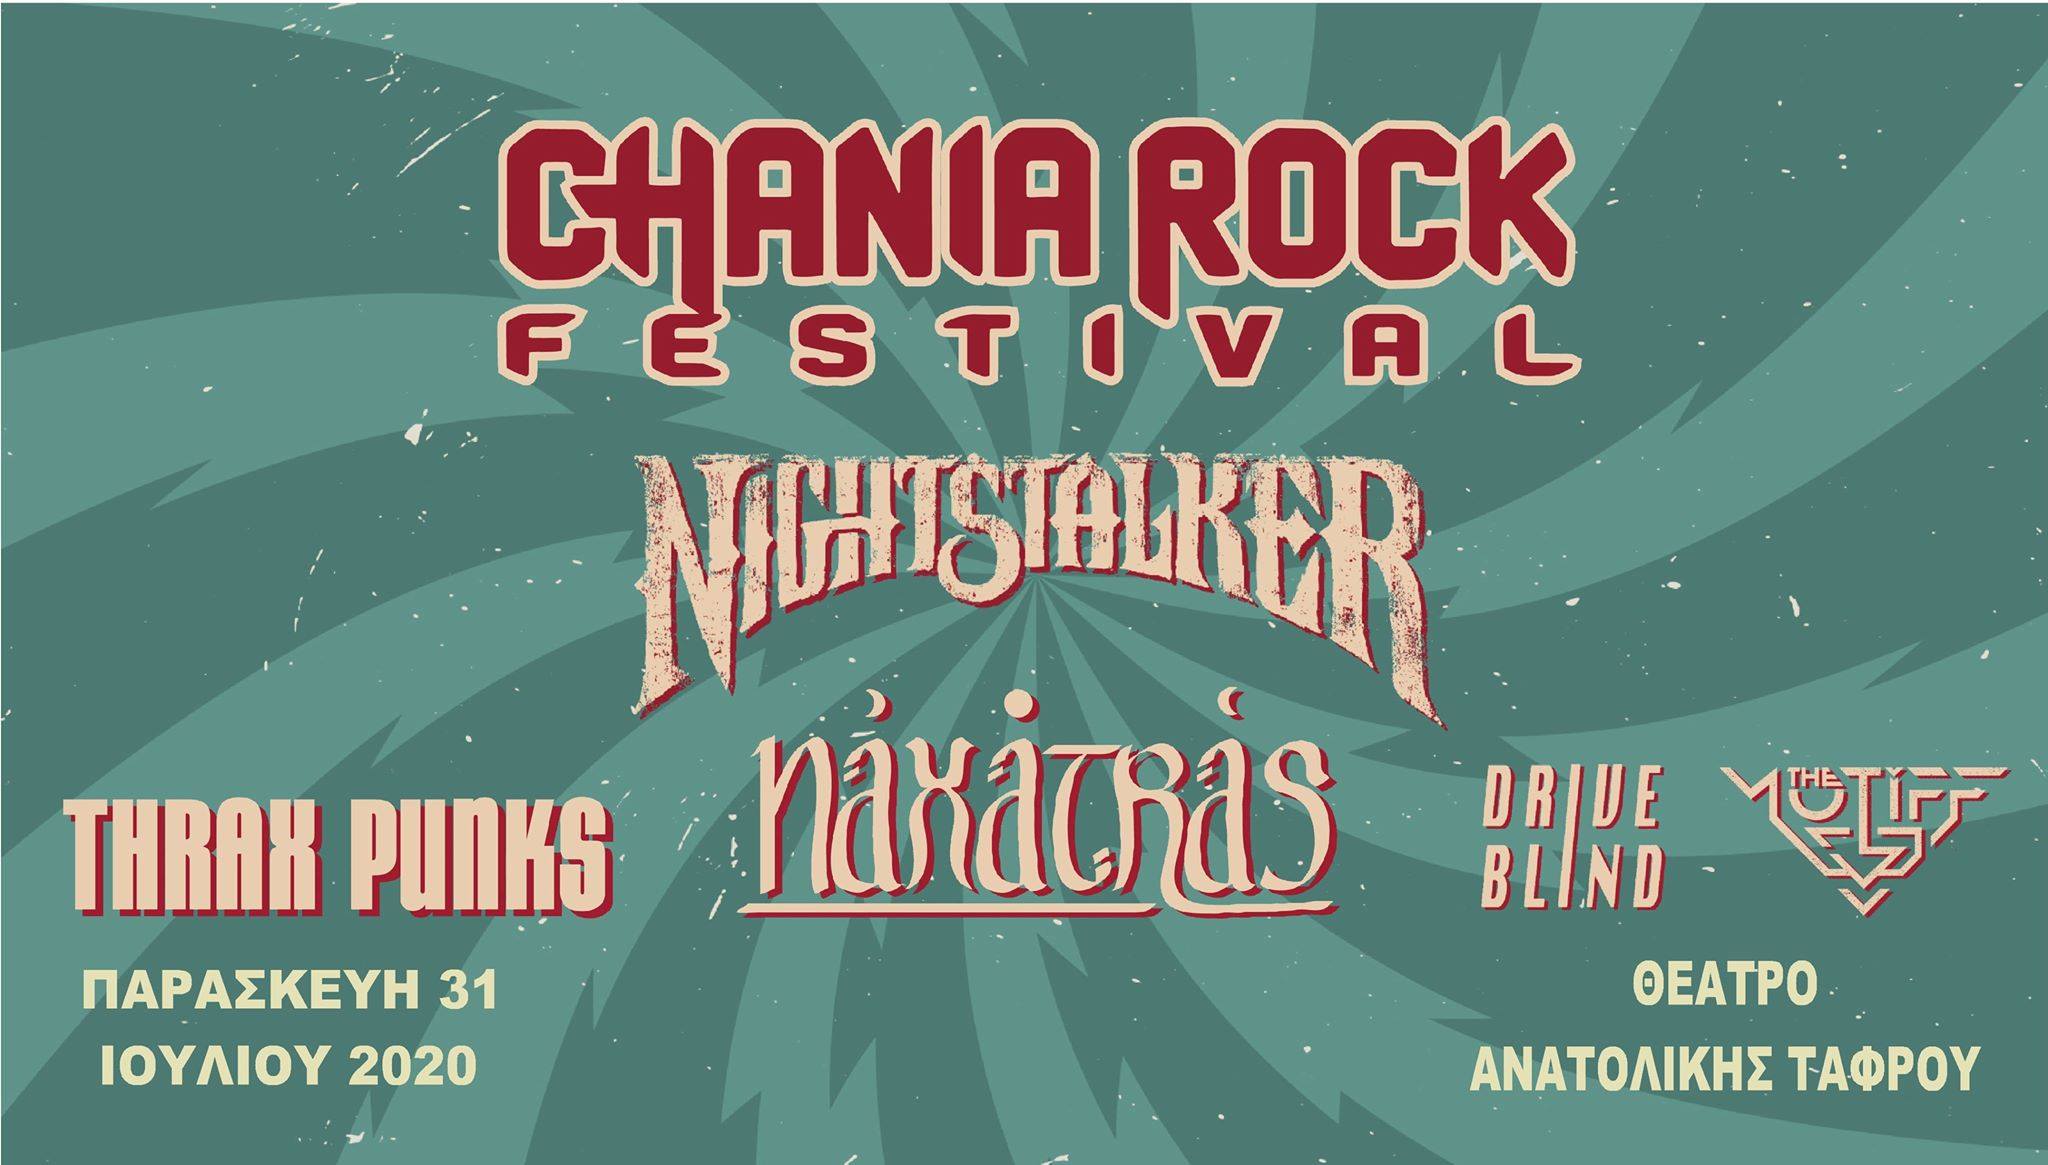 Chania Rock Festival 2020